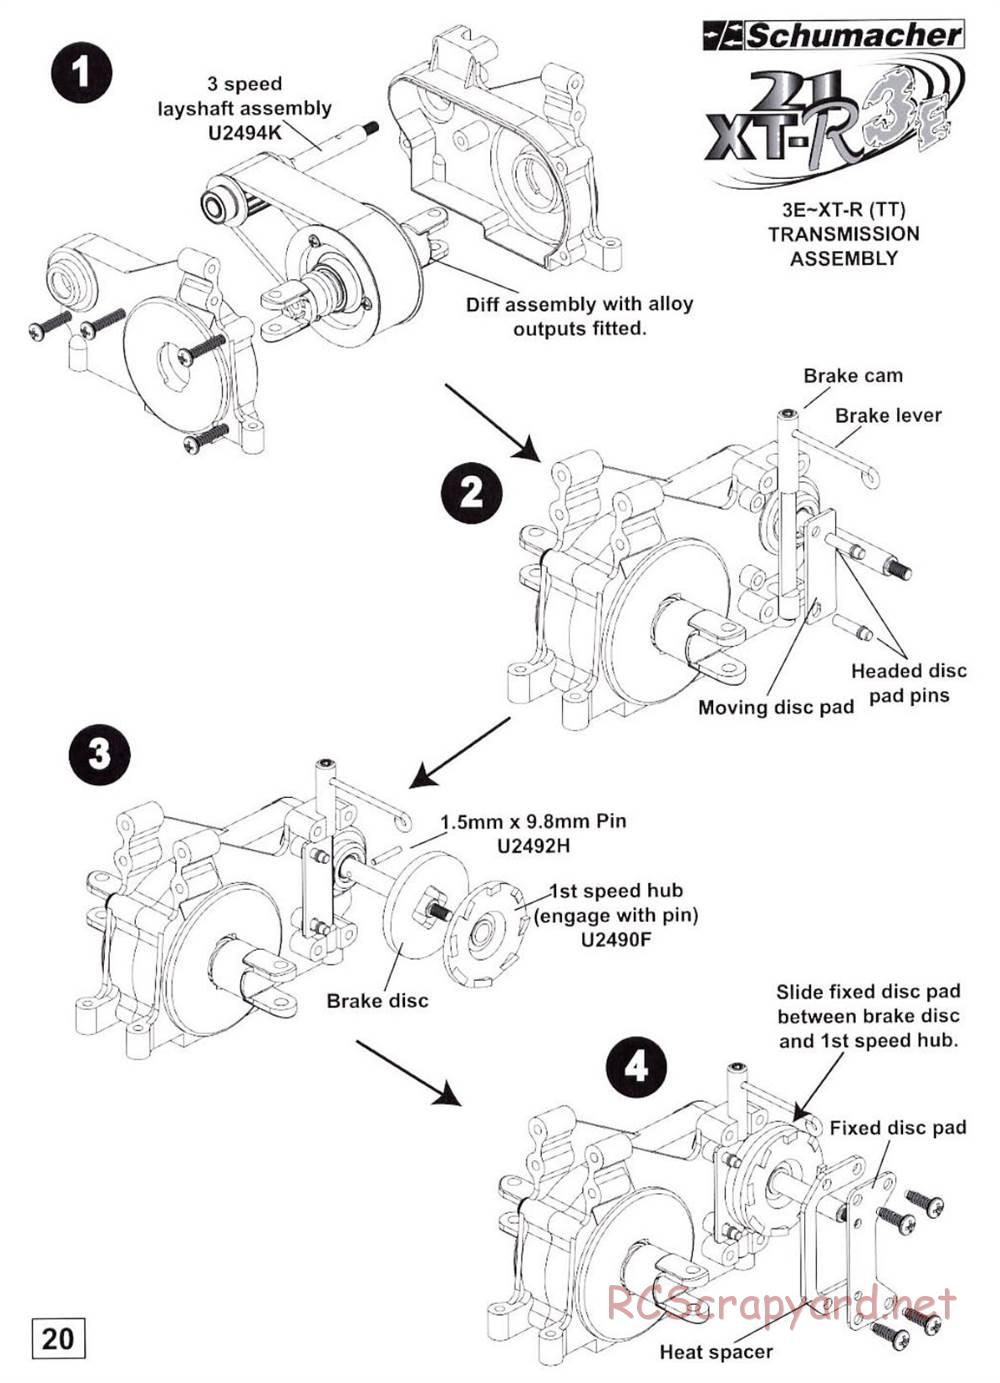 Schumacher - Nitro 21 XT-R3E - Manual - Page 15